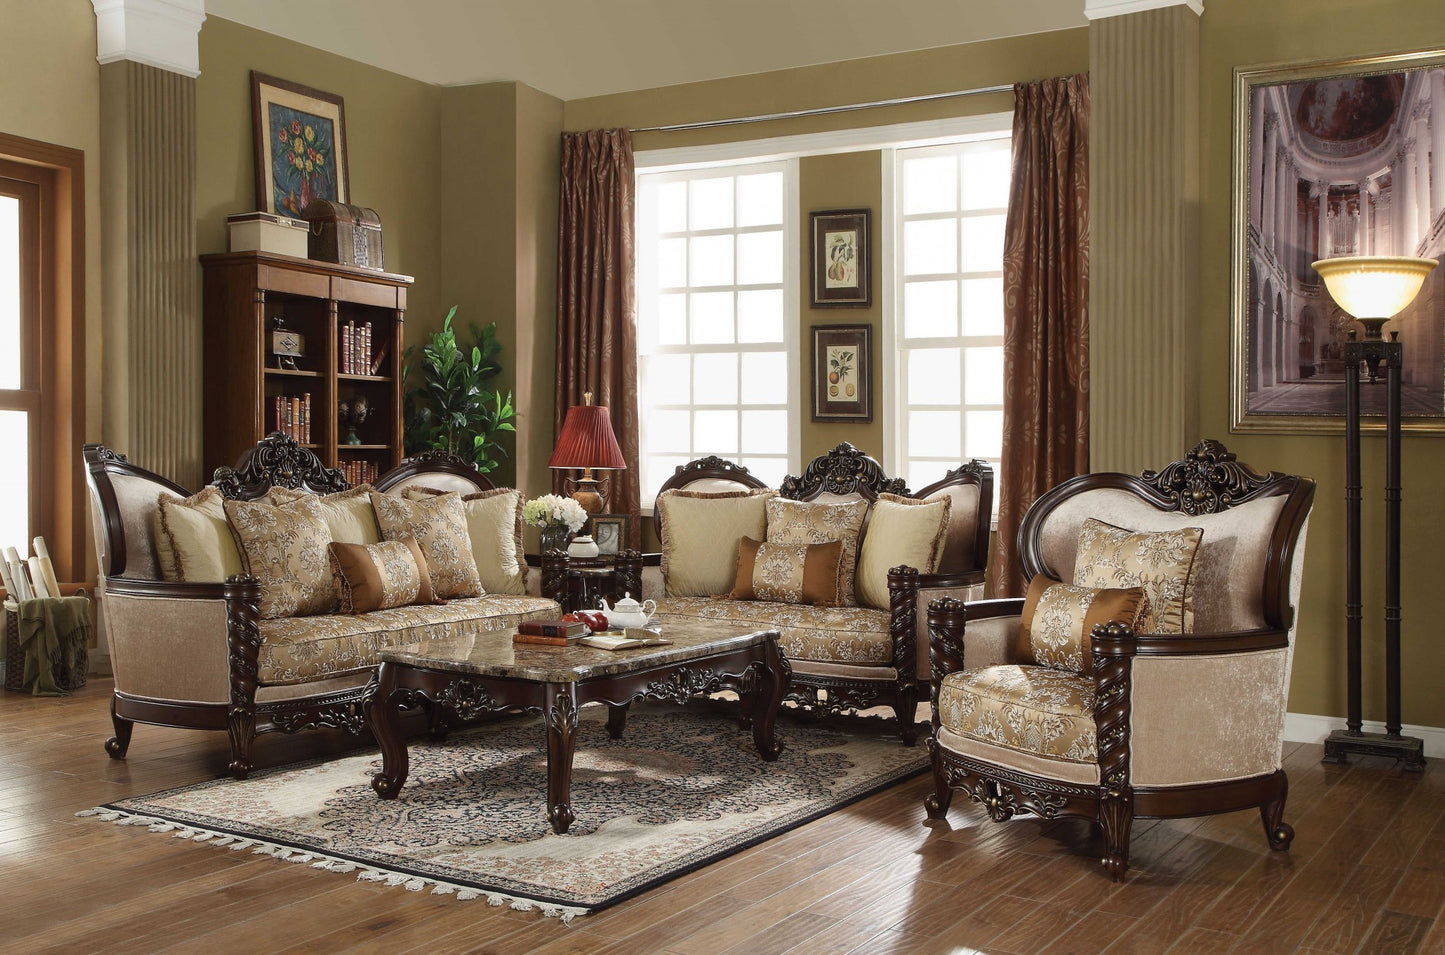 39' X 85' X 49' Fabric Dark Walnut Upholstery Wood LegTrim Sofa w6 Pillows